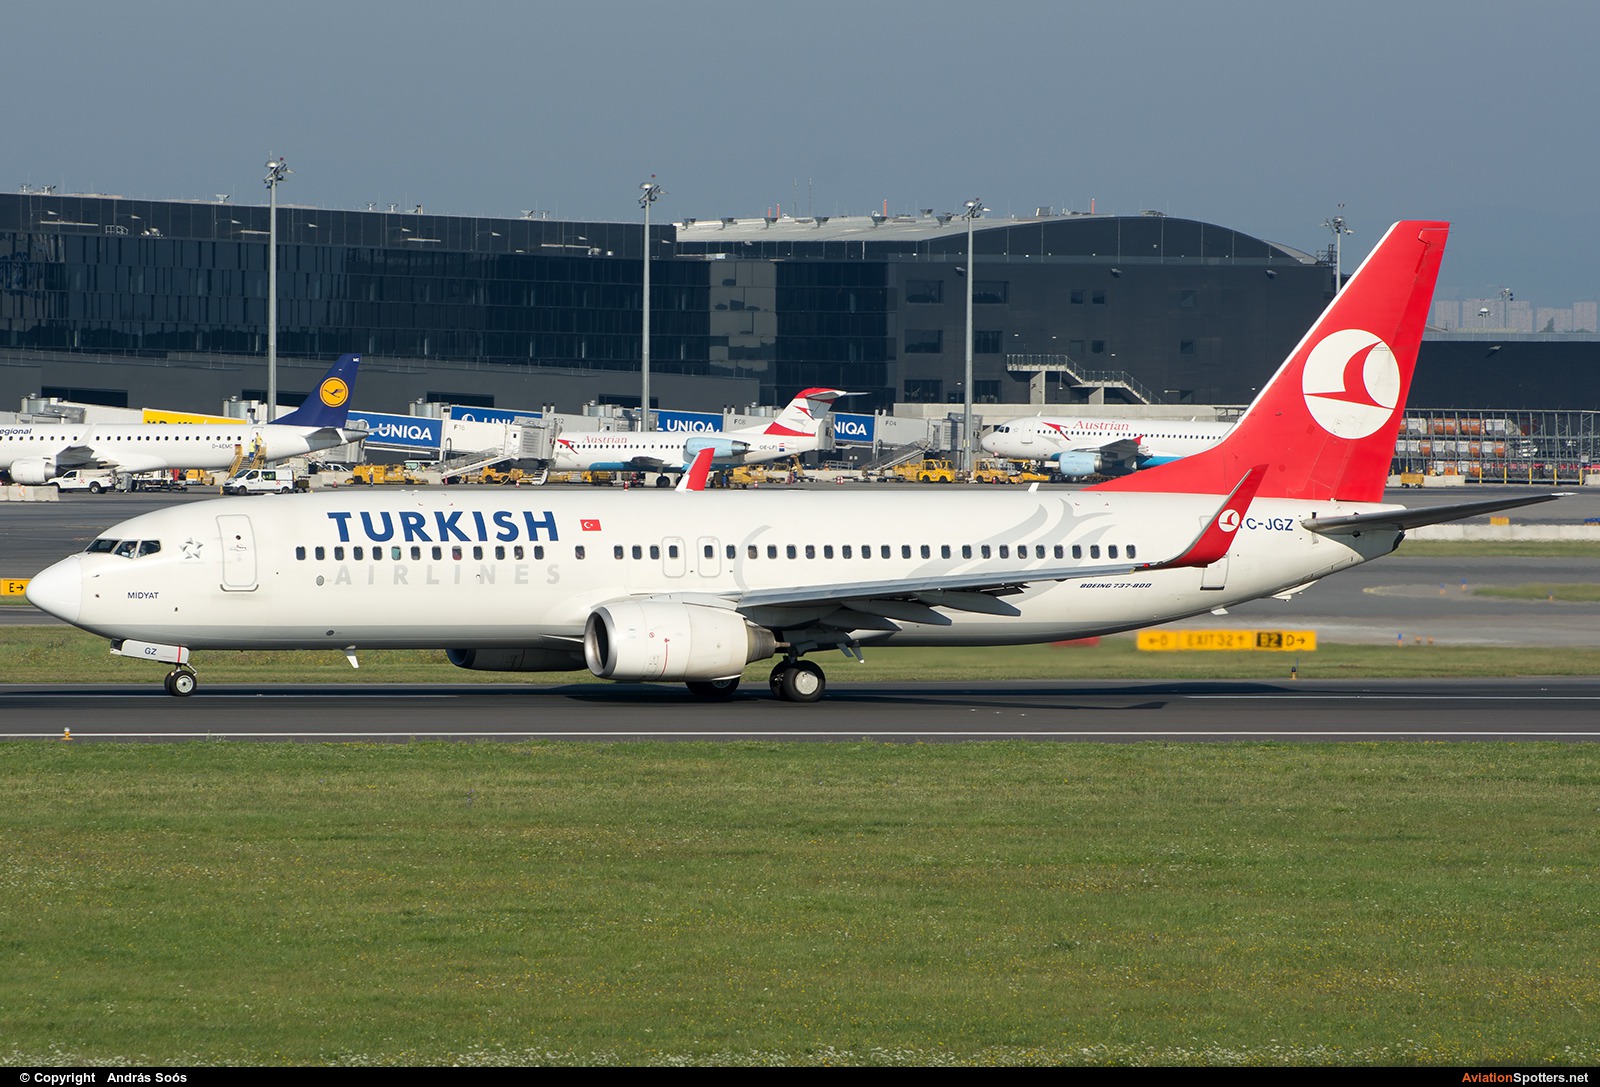 Turkish Airlines  -  737-800  (TC-JGZ) By András Soós (sas1965)